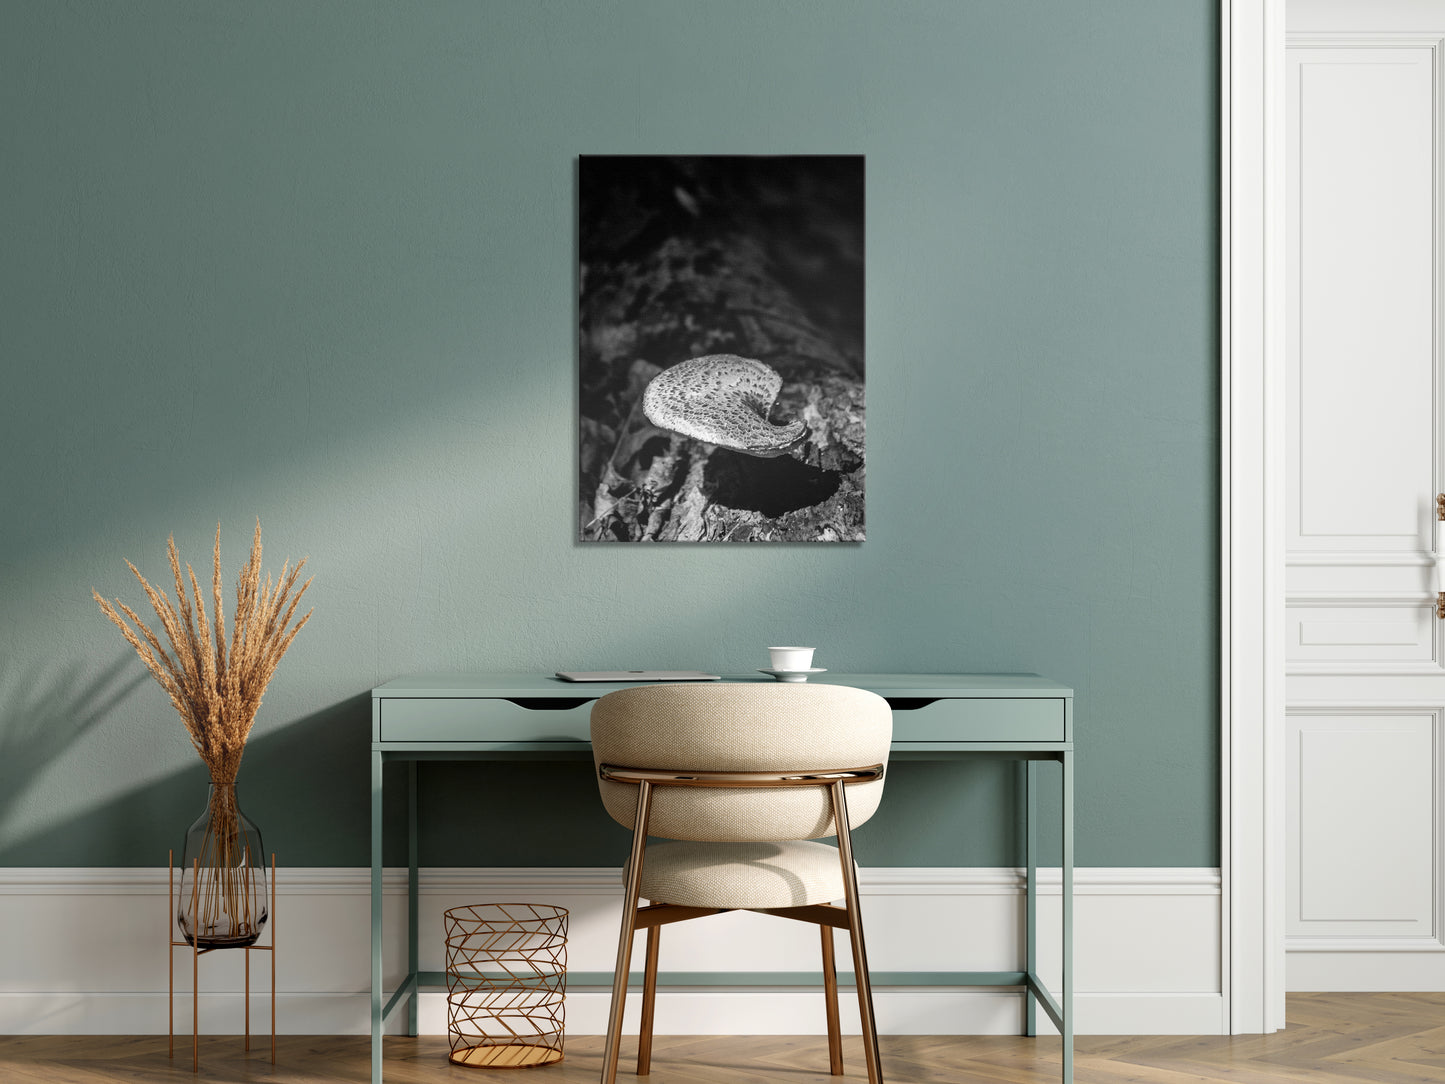 Artwork For Home Office: Mushroom on Log Black and White Botanical Nature Canvas Wall Art Prints